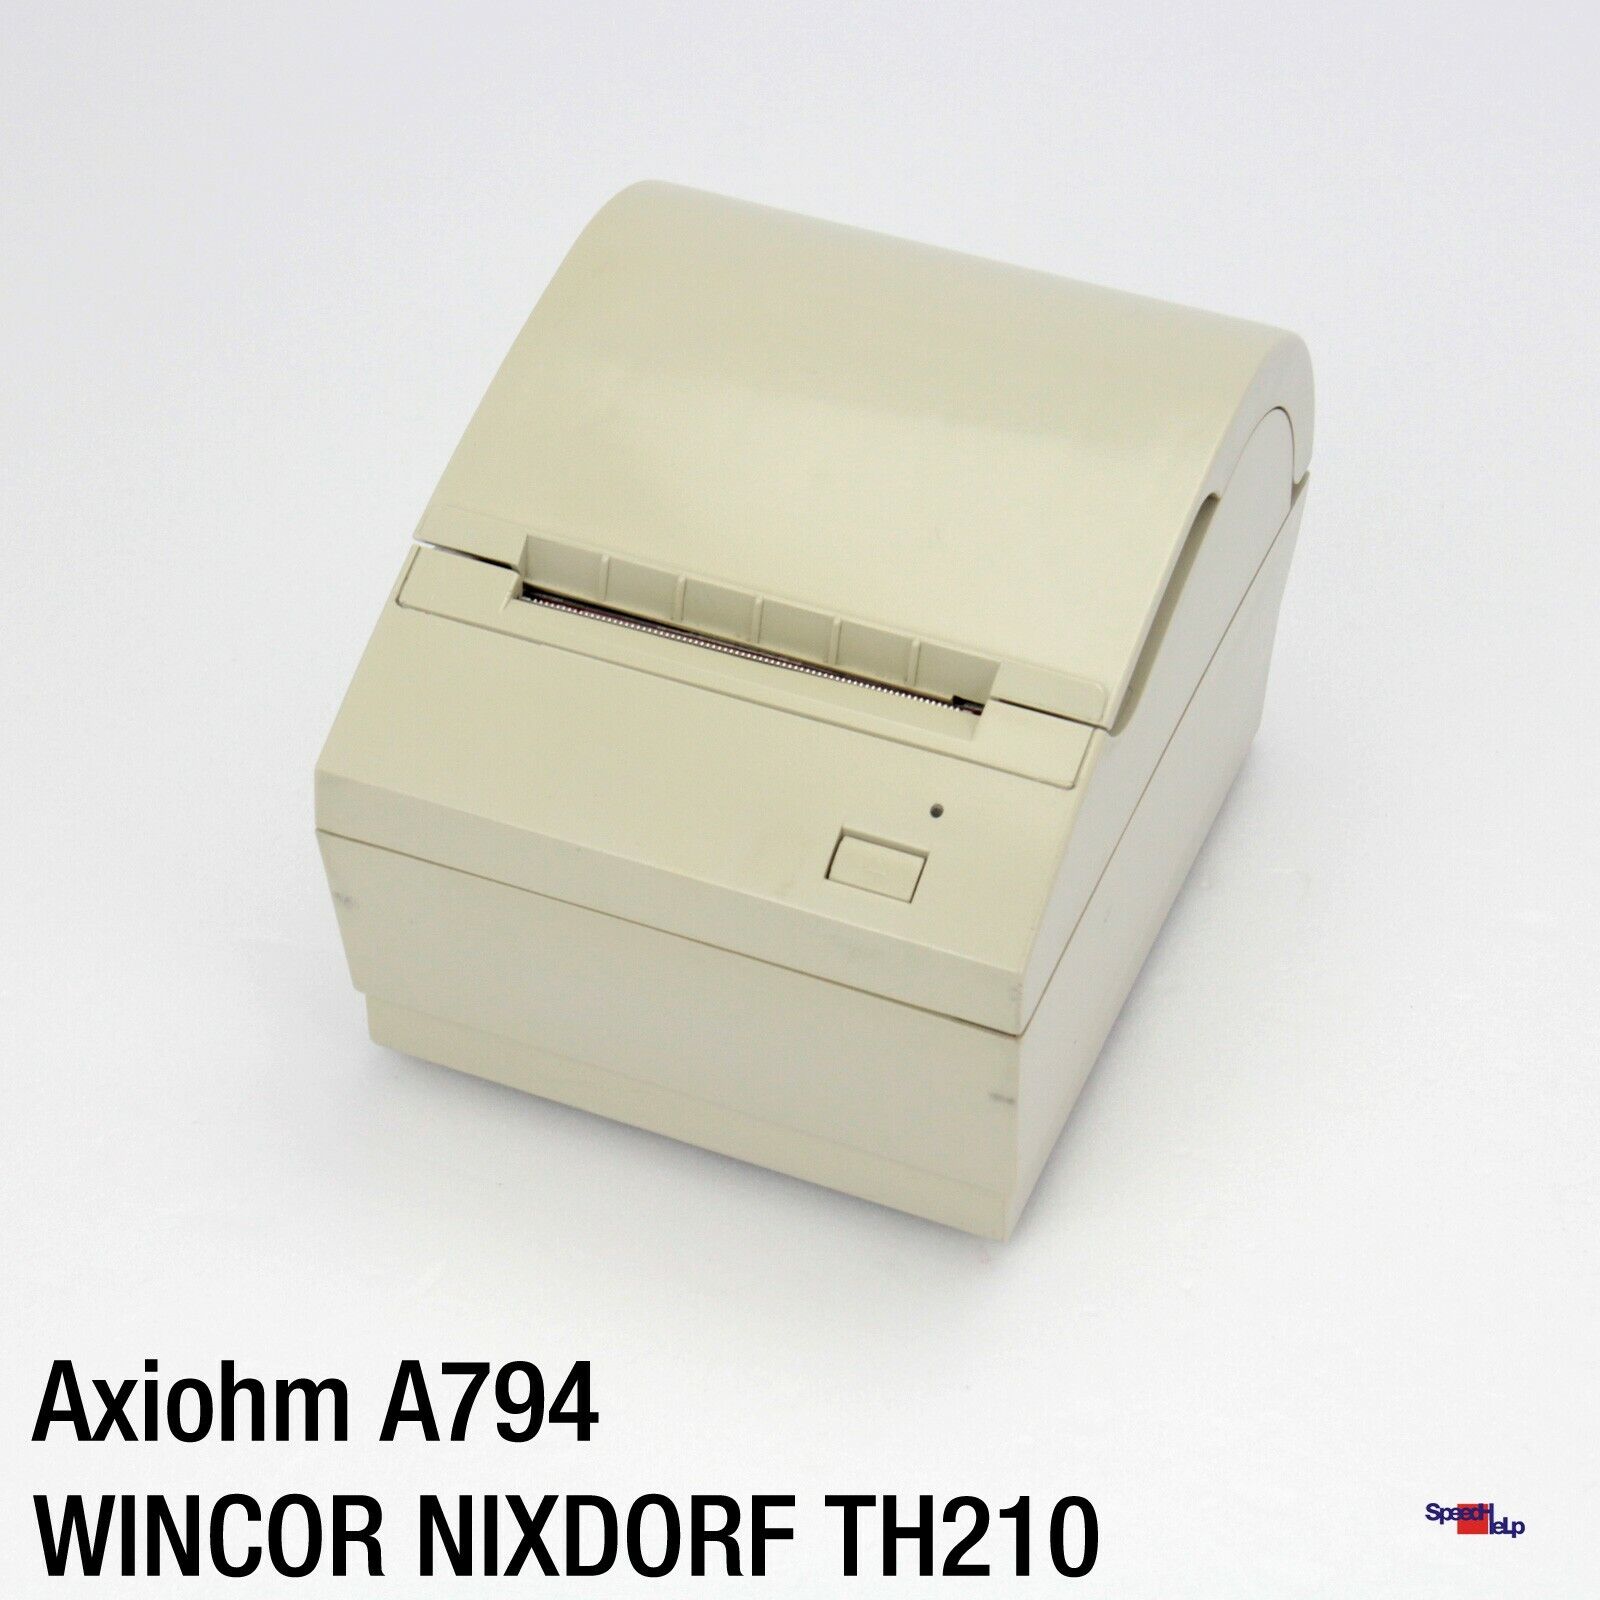 Bon-Kassendrucker Axiohm A794 Wincor Nixdorf TH210 Printer Pos Ware-B